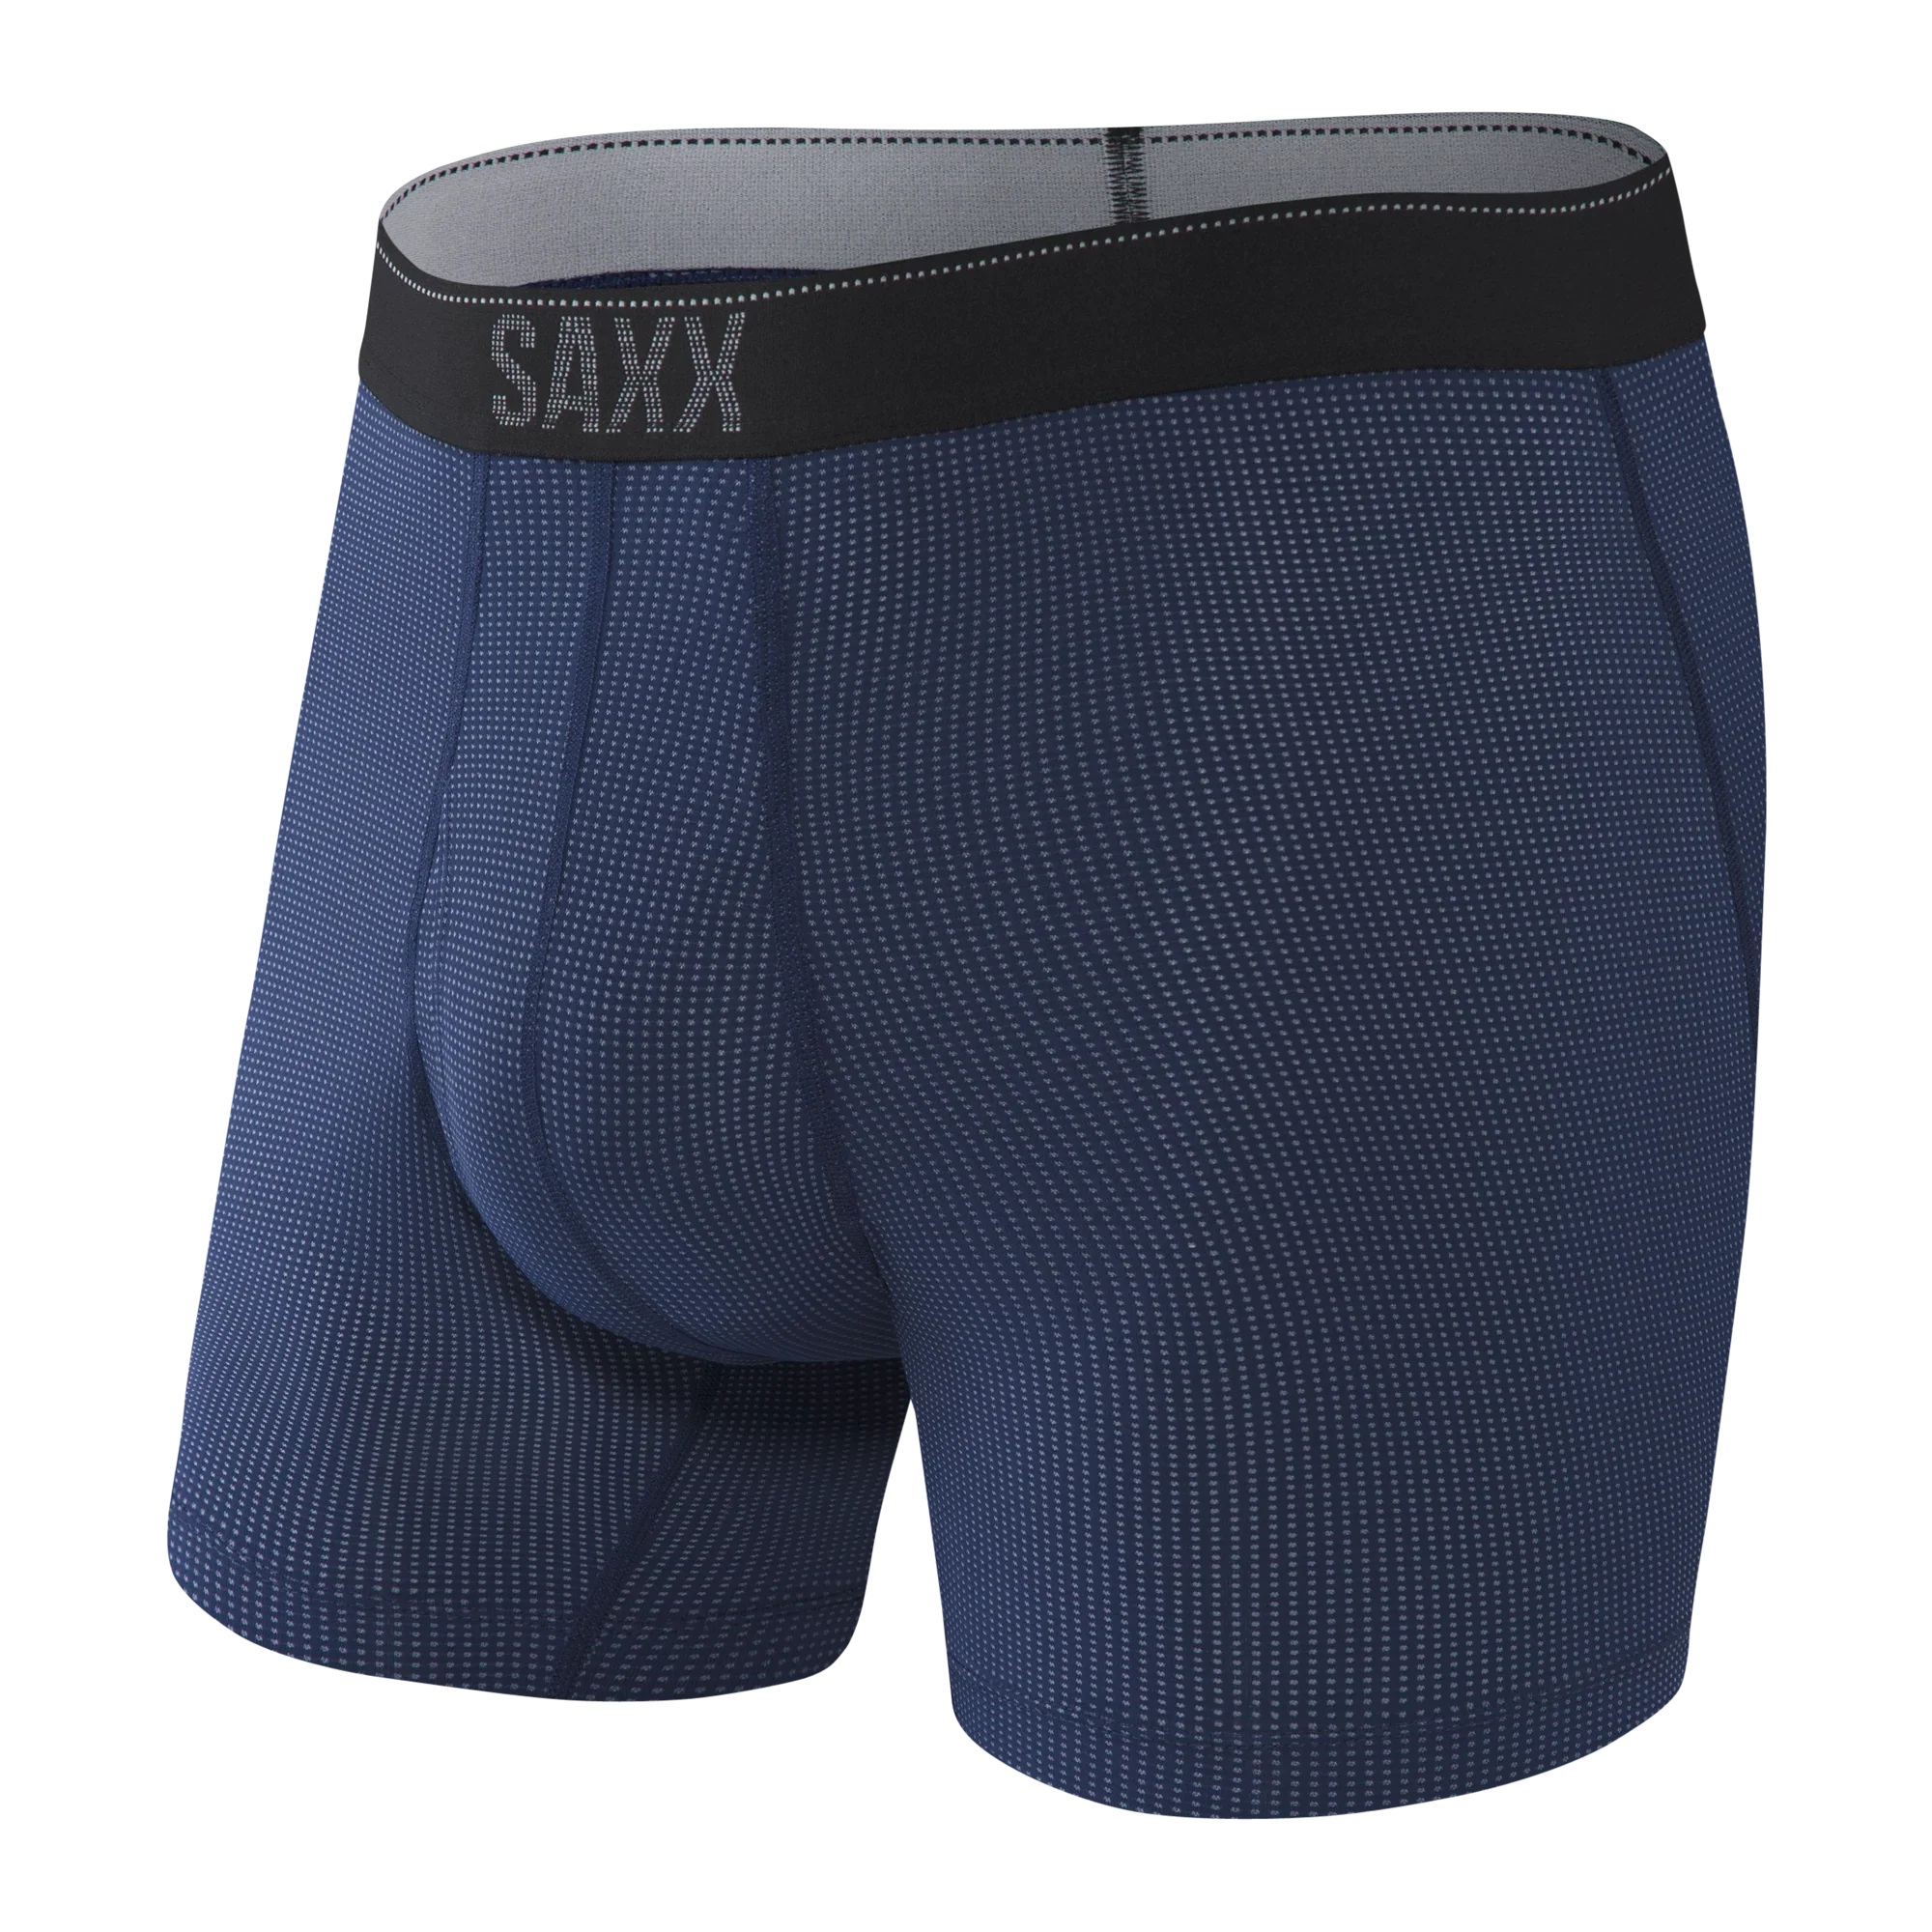 'SAXX Quest Quick Dry Mesh Boxer Brief - Midnight' in 'Blue' colour